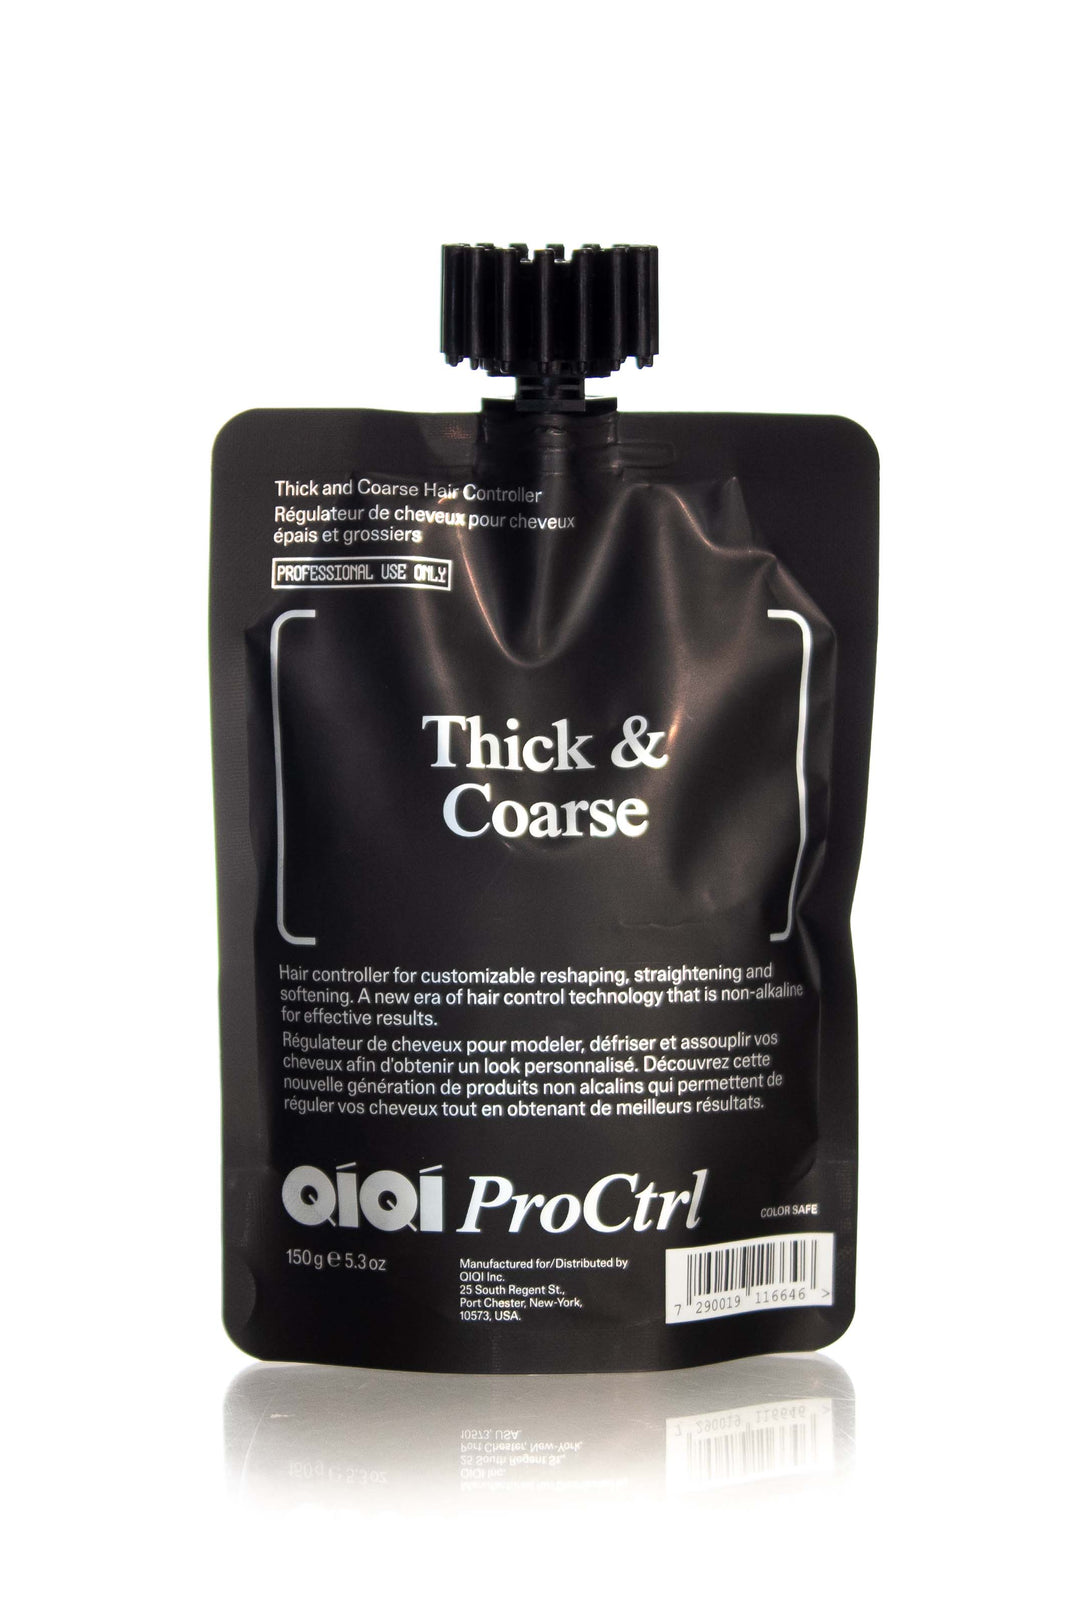 QIQI PRO CTRL THICK & COARSE HAIR CONTROLLER 150G